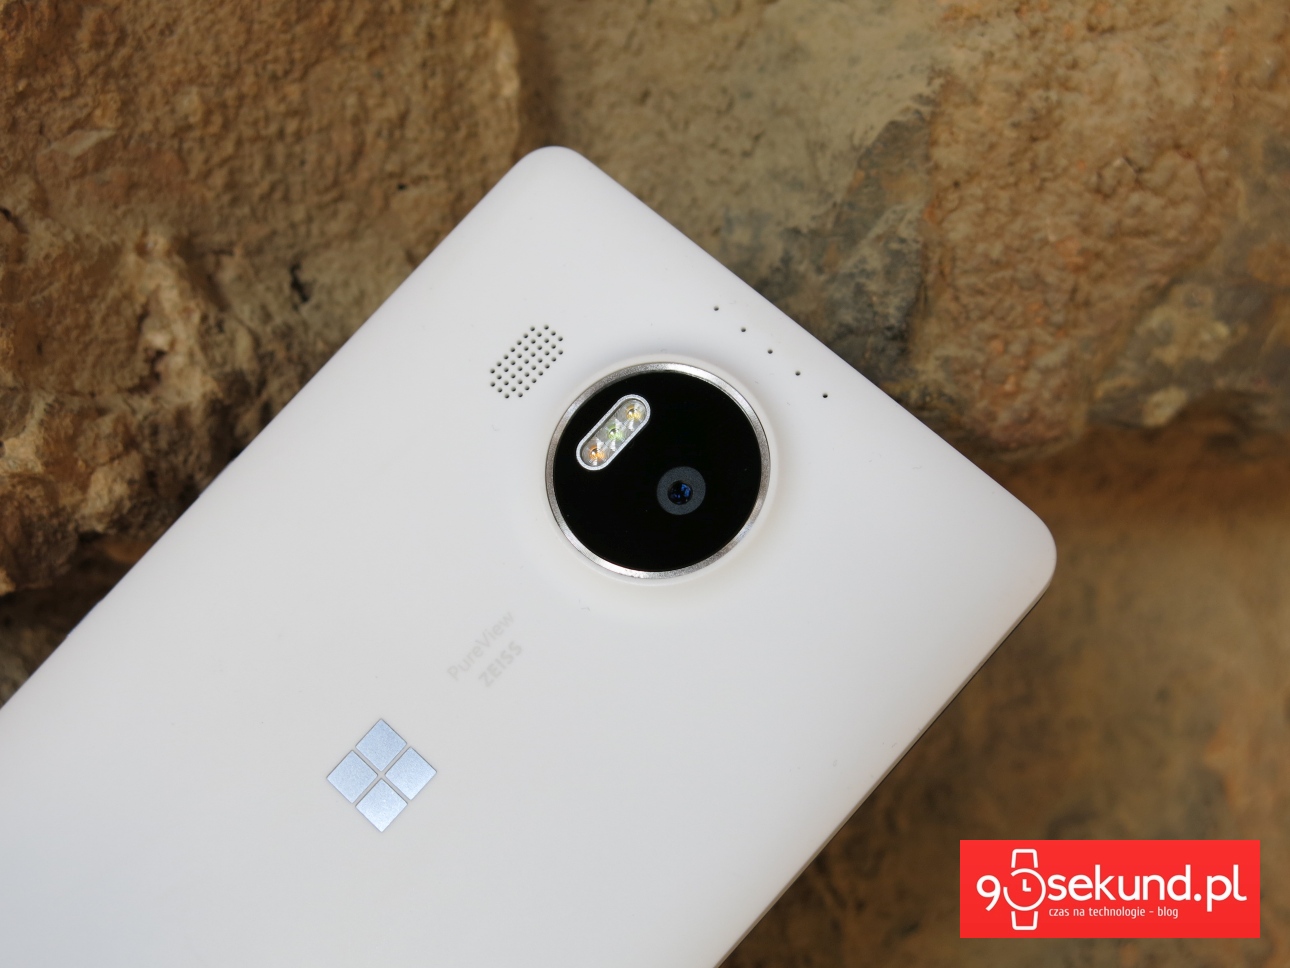 Recenzja Microsoft Lumia 950XL - 90sekund.pl